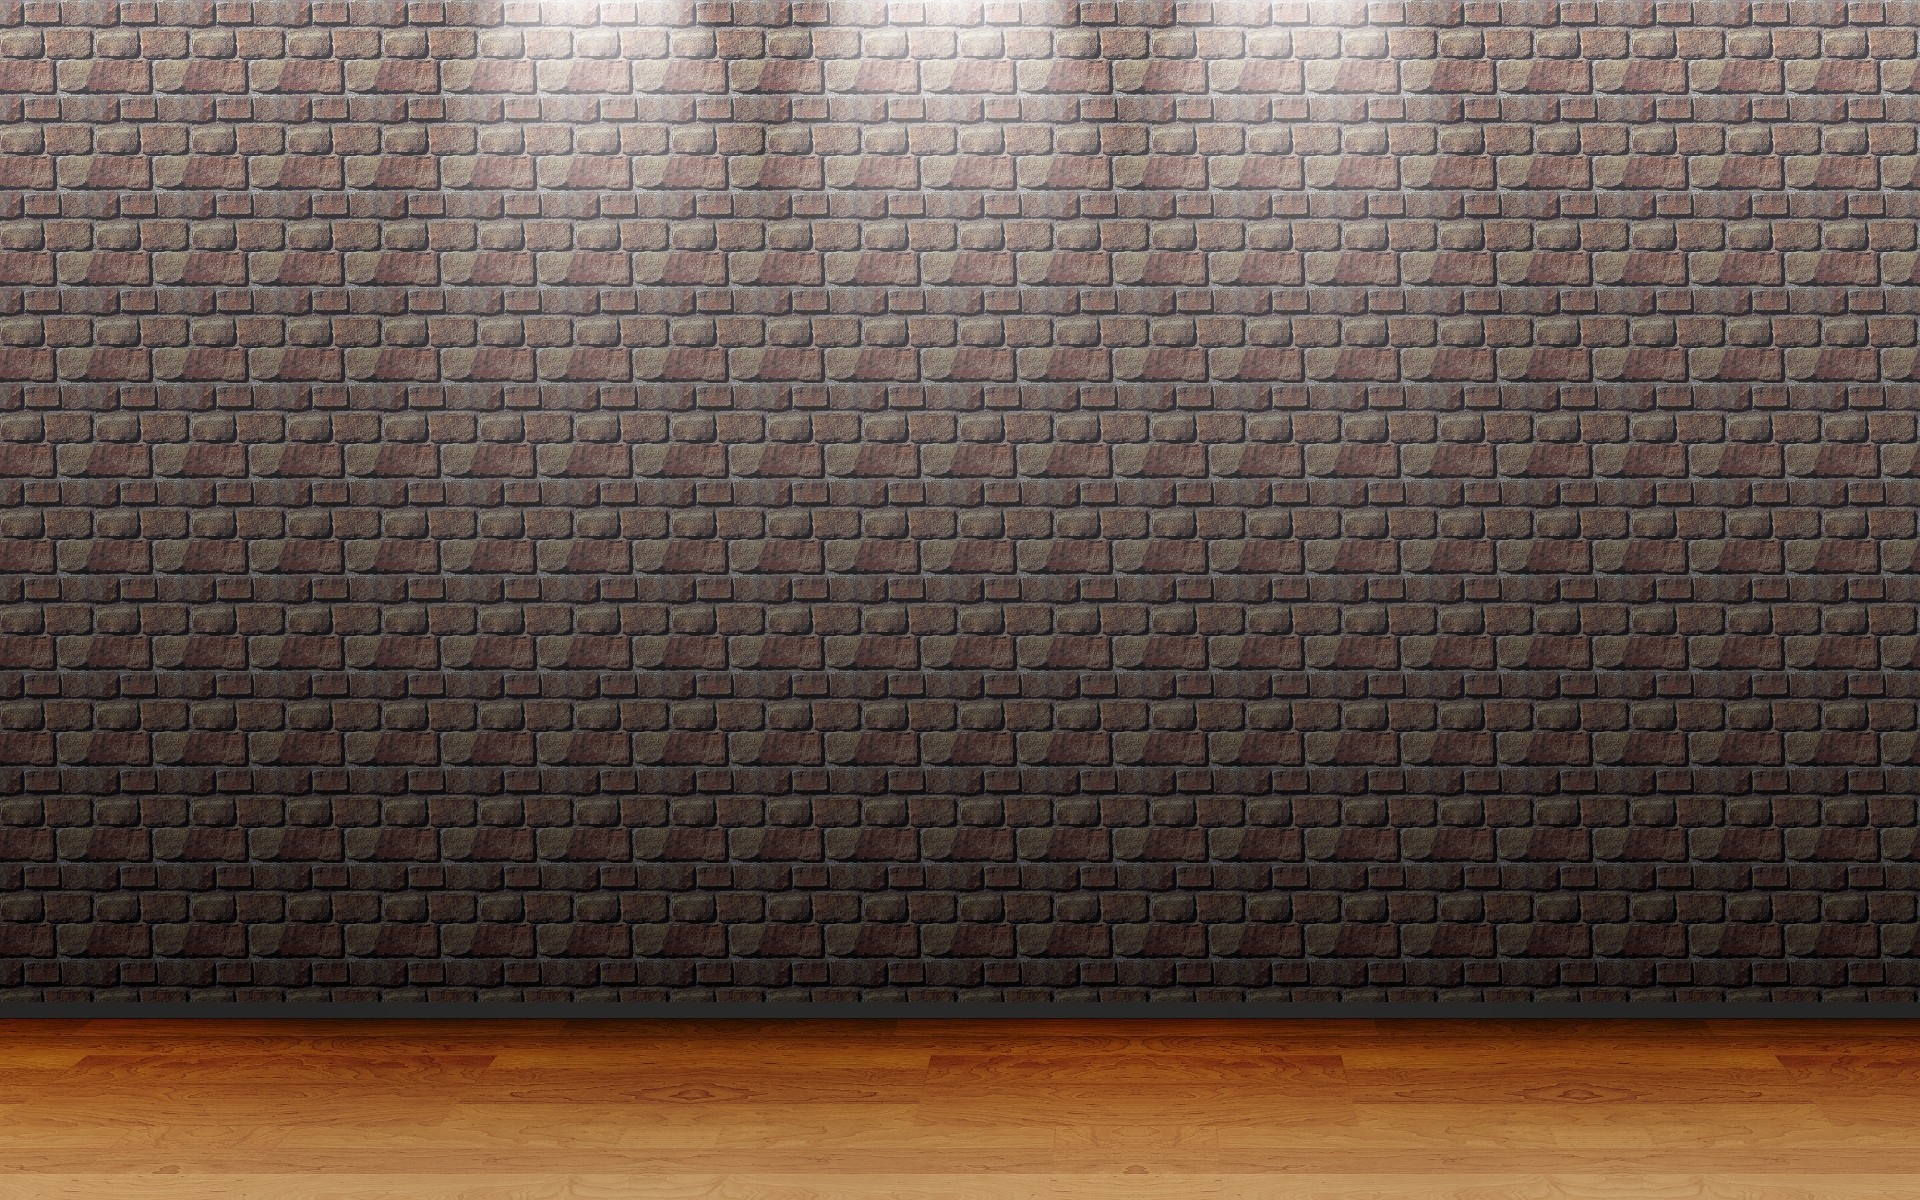 Brick Pattern And Wood Floor Widescreen Wallpaper